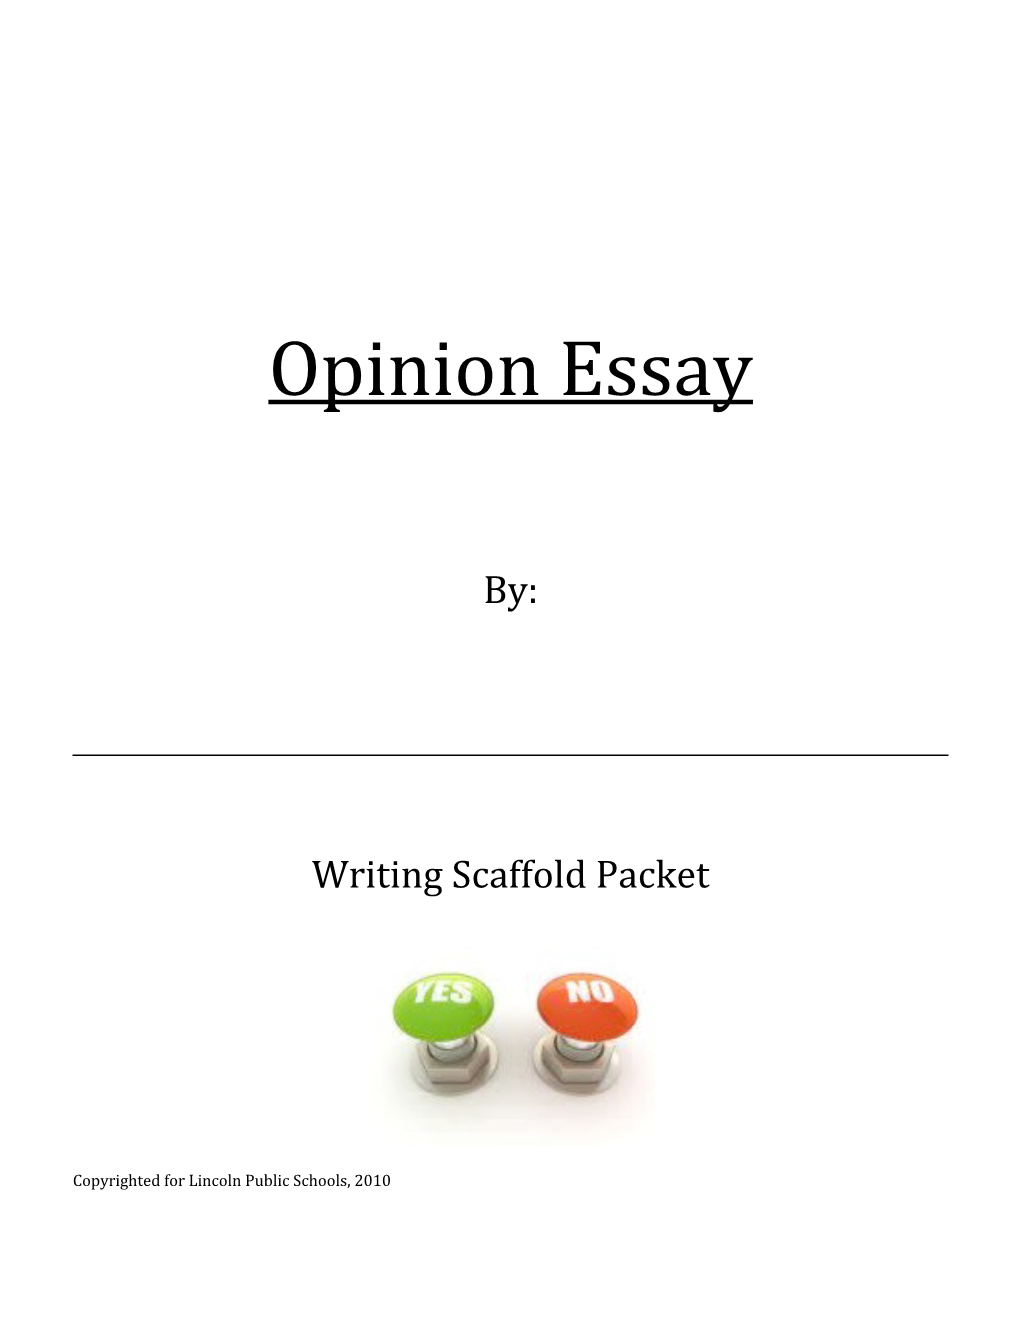 Opinion Essay